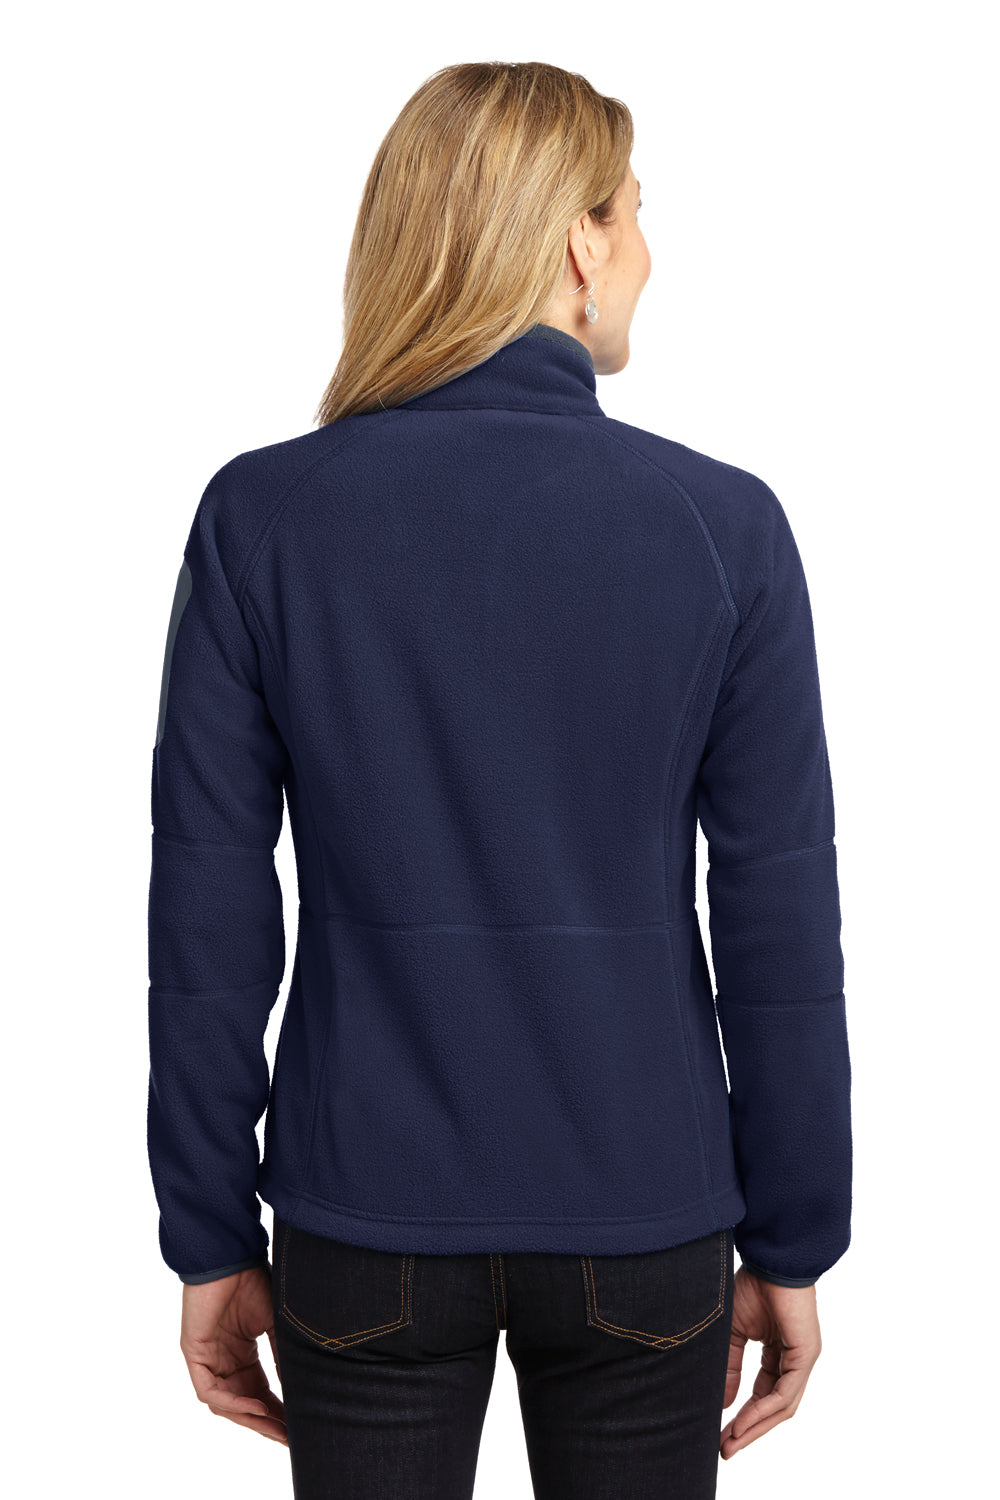 Port Authority L229 Womens Full Zip Fleece Jacket Navy Blue/Grey Back